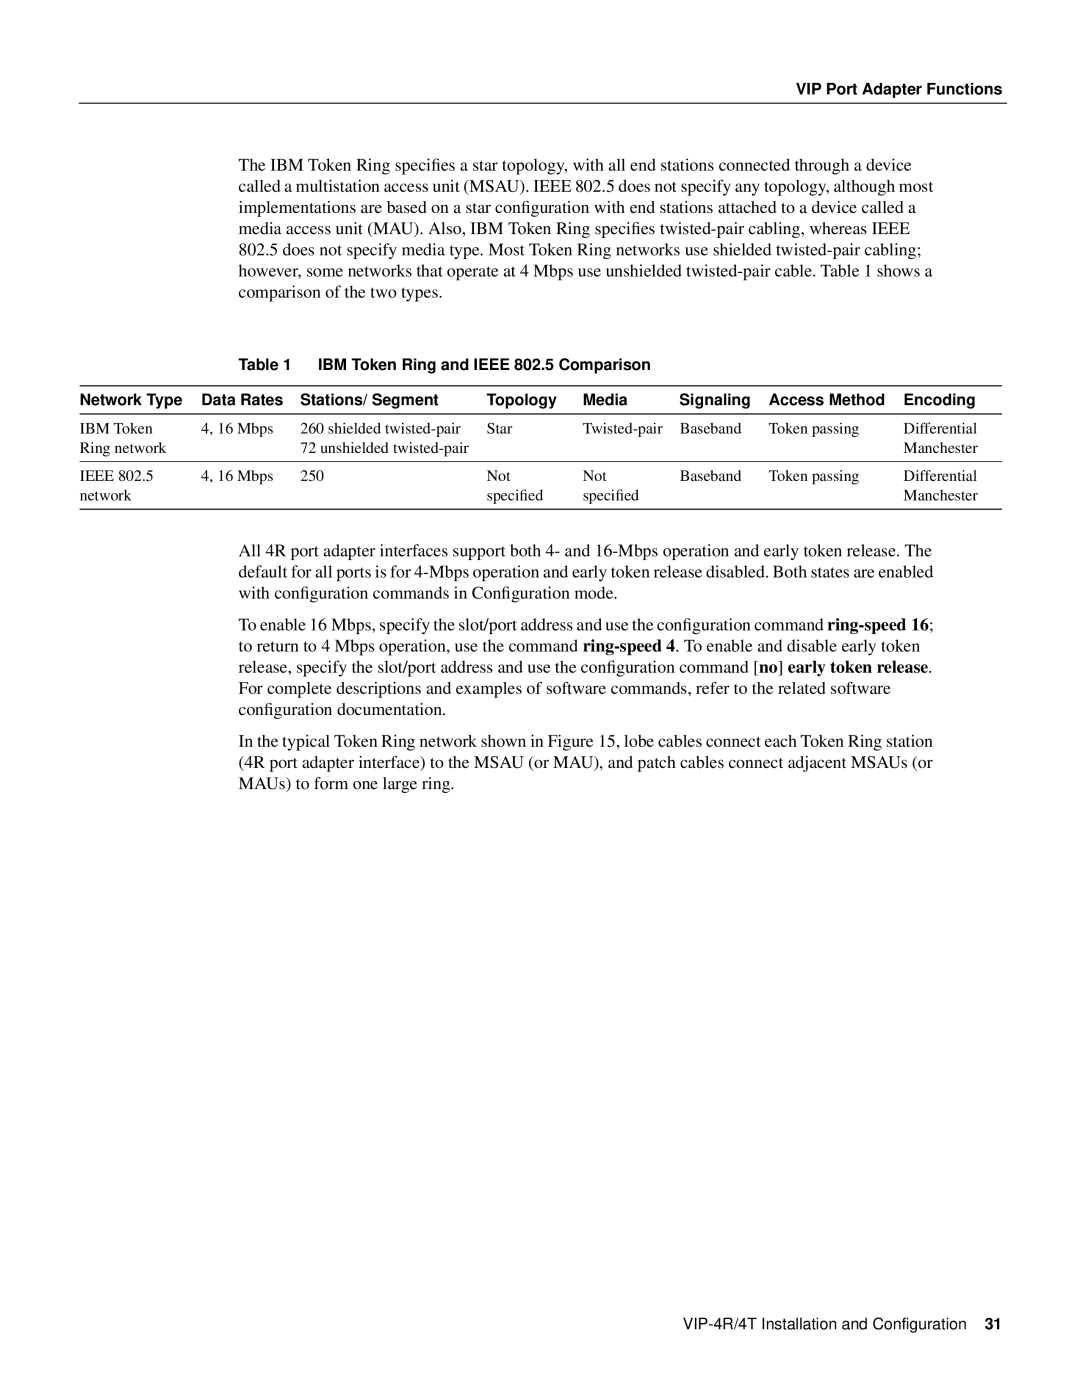 Cisco Systems VIP-4R/4T manual 